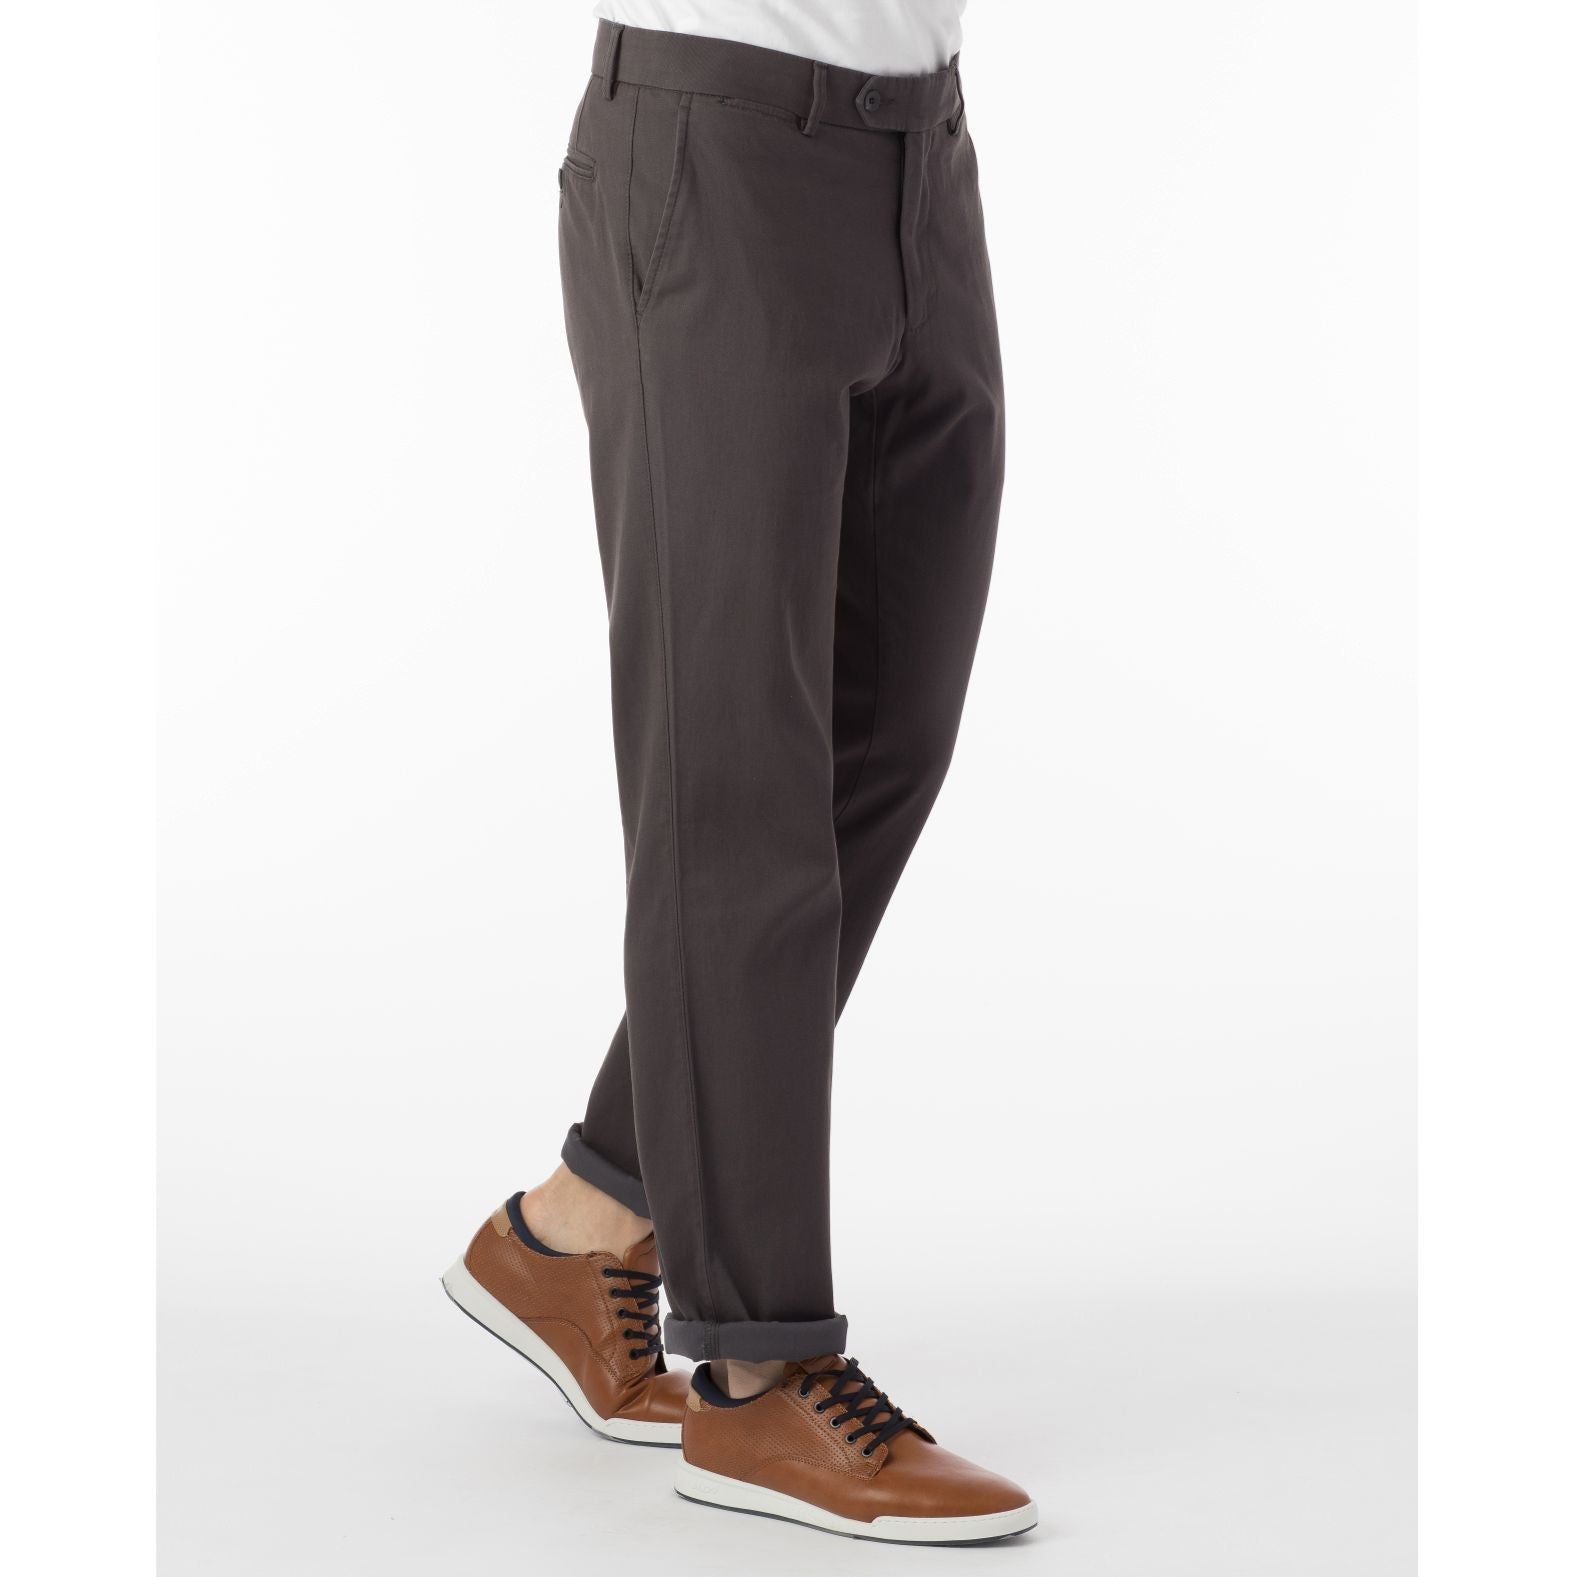 Perma Color Pima Twill Khaki Pants in Pavement, Size 32 (Mackay Slim Fit) by Ballin